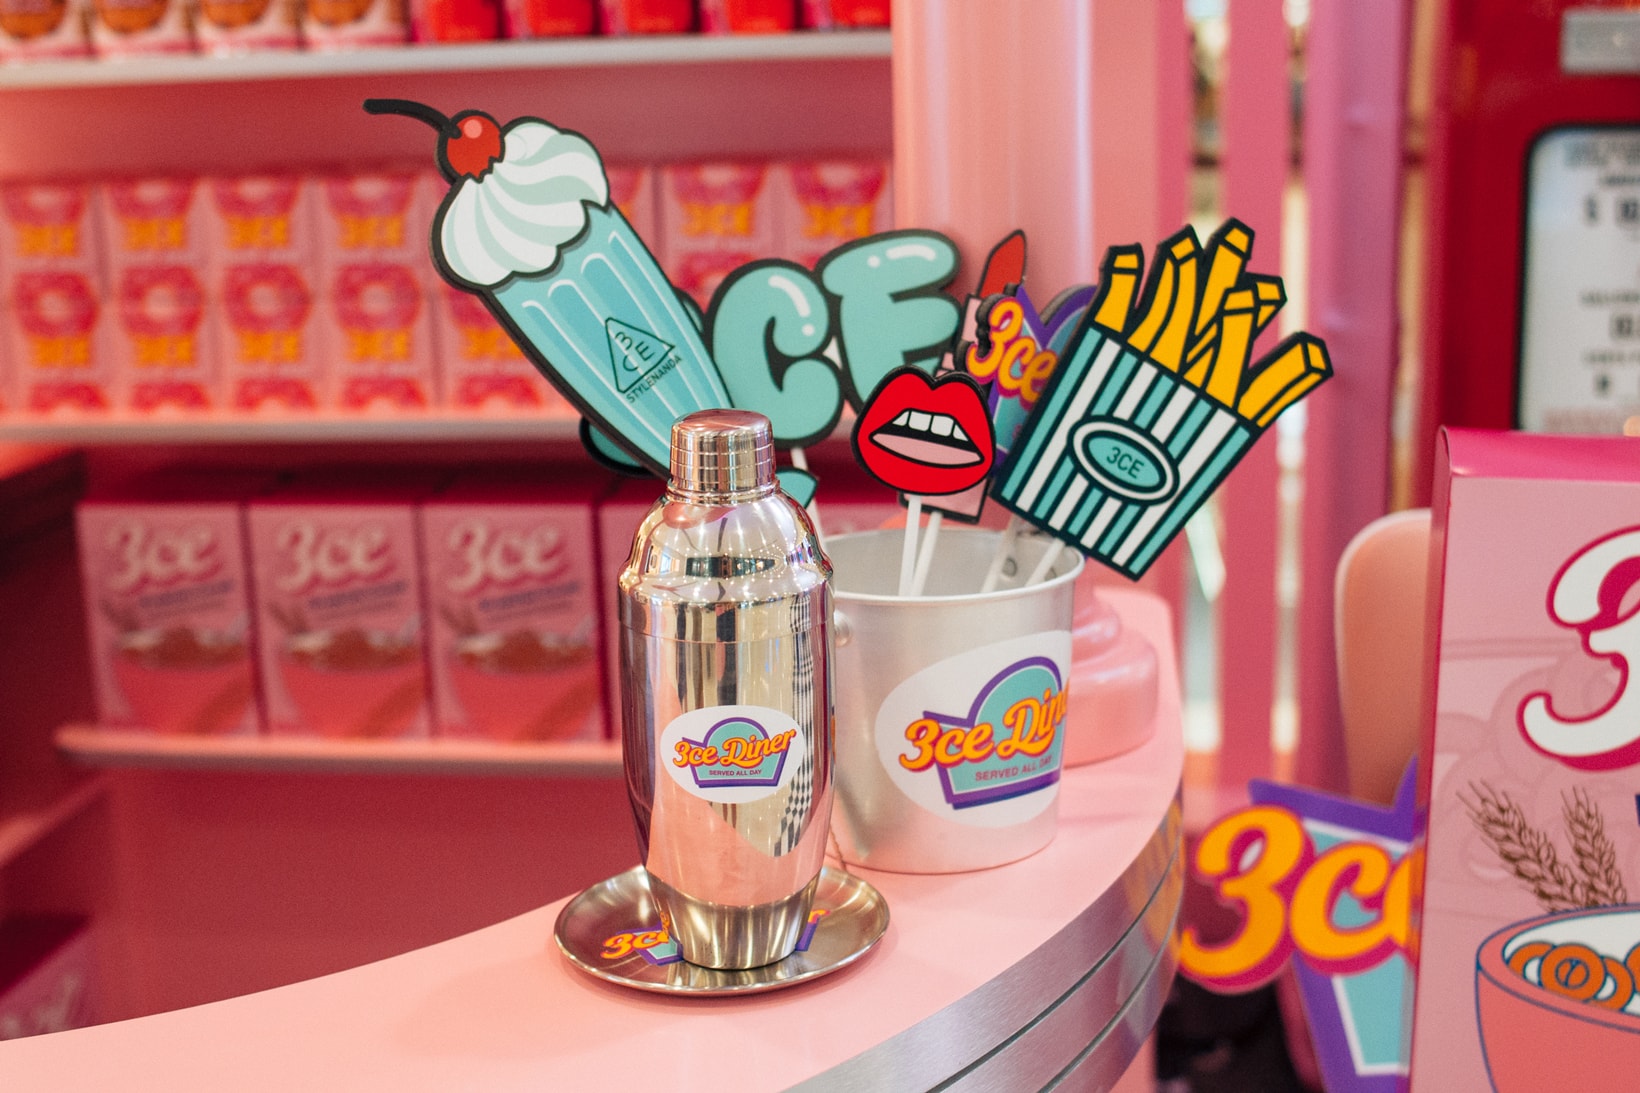 3CE Diner Pop Up Hong Kong Beauty Makeup Cereal Samples